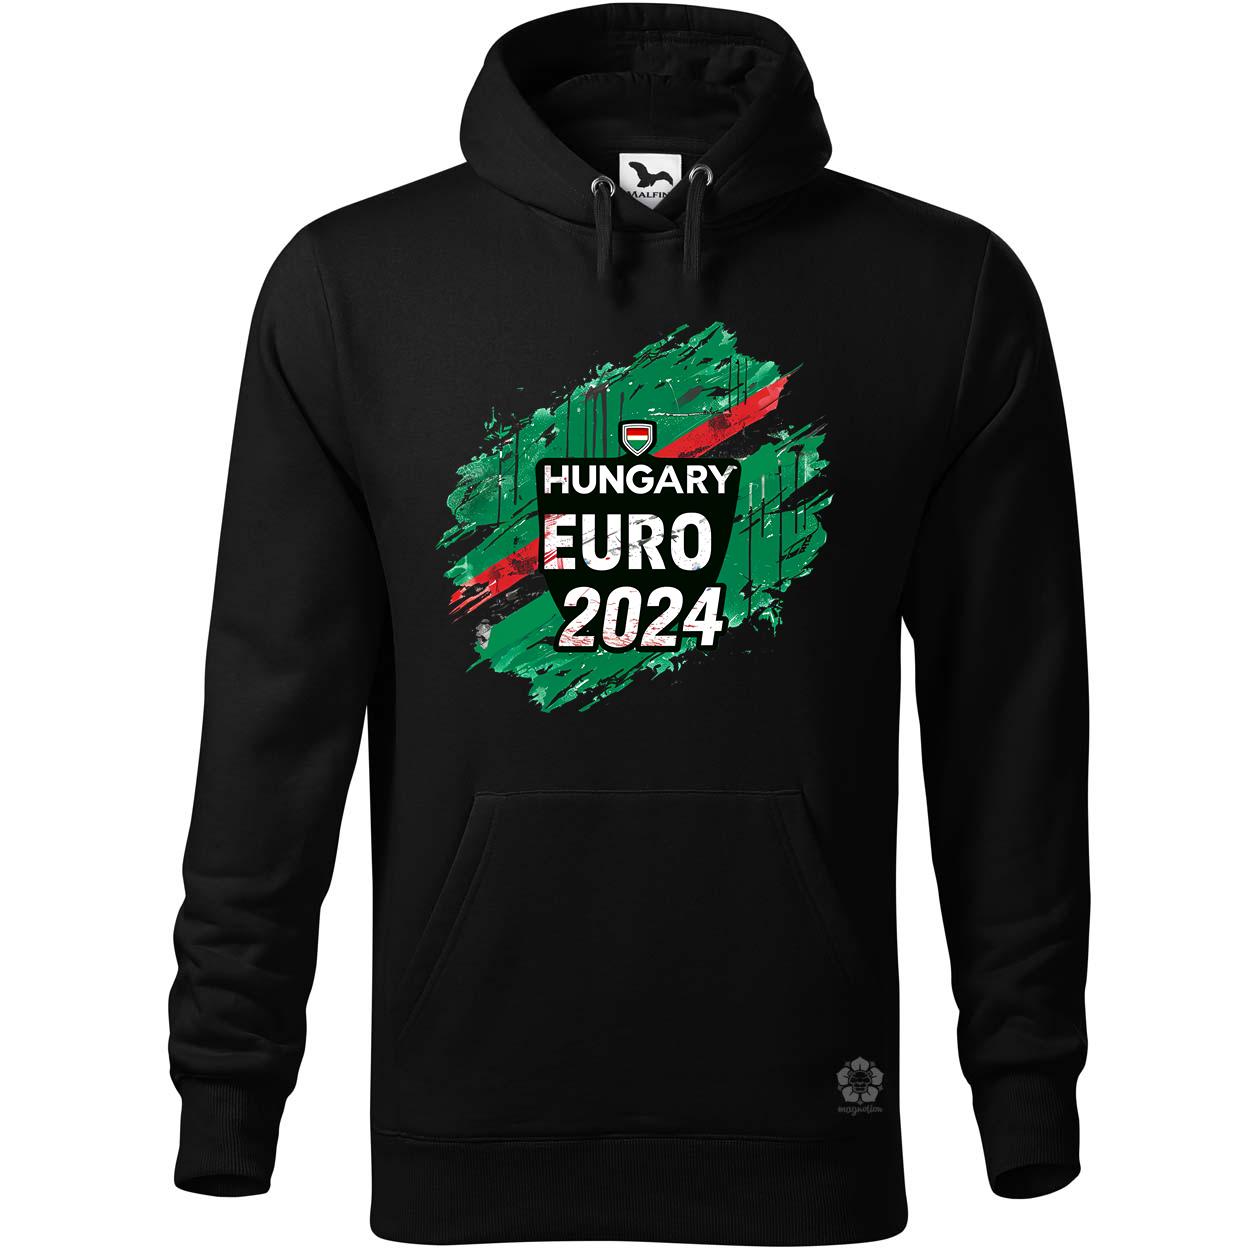 Hungary Euro 2024 v2